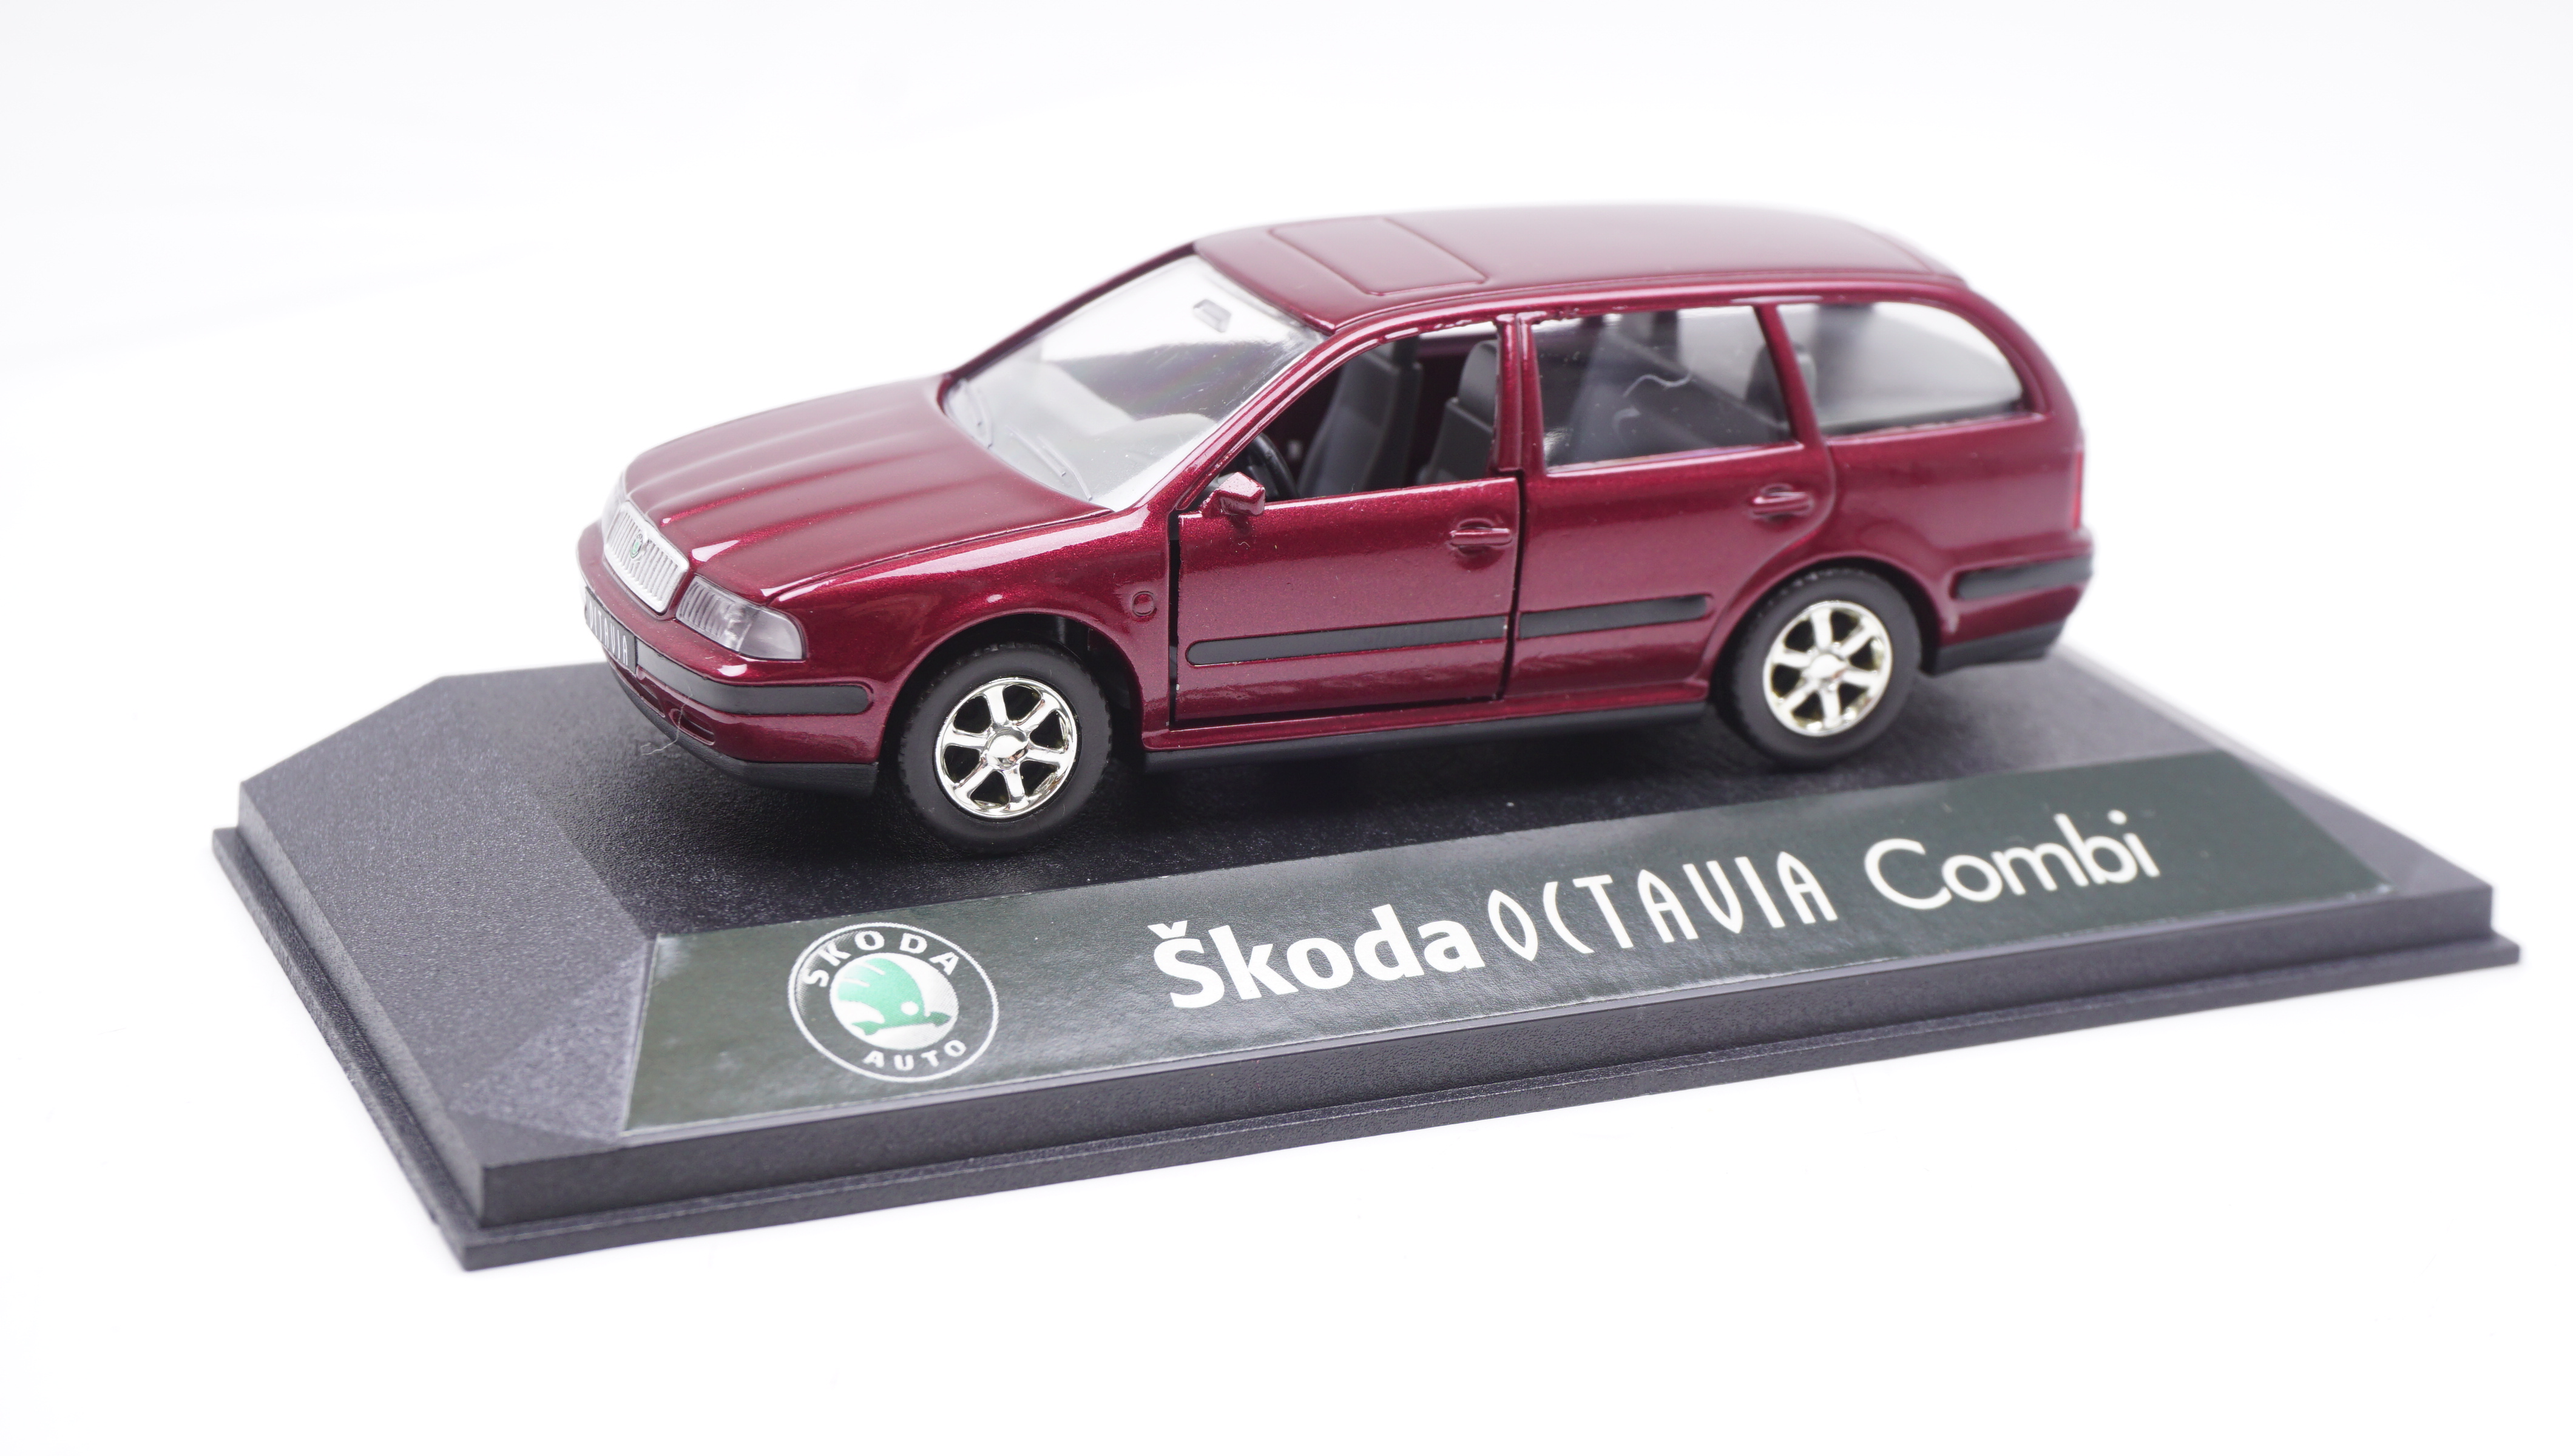 Modellauto Skoda Octavia I Combi (weinrot)